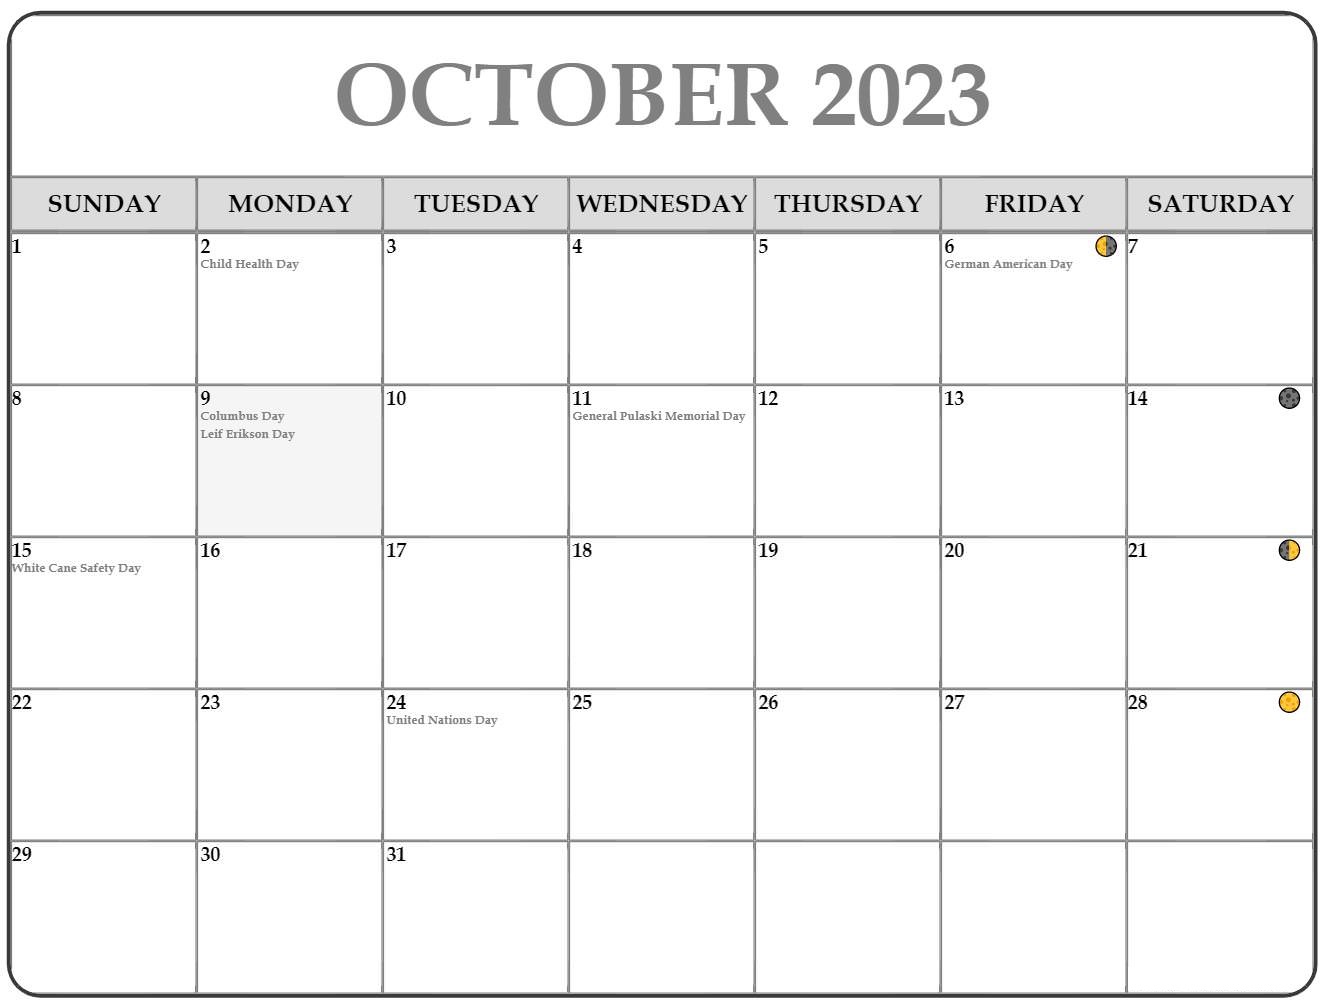 October Moon Phases Calendar 2023